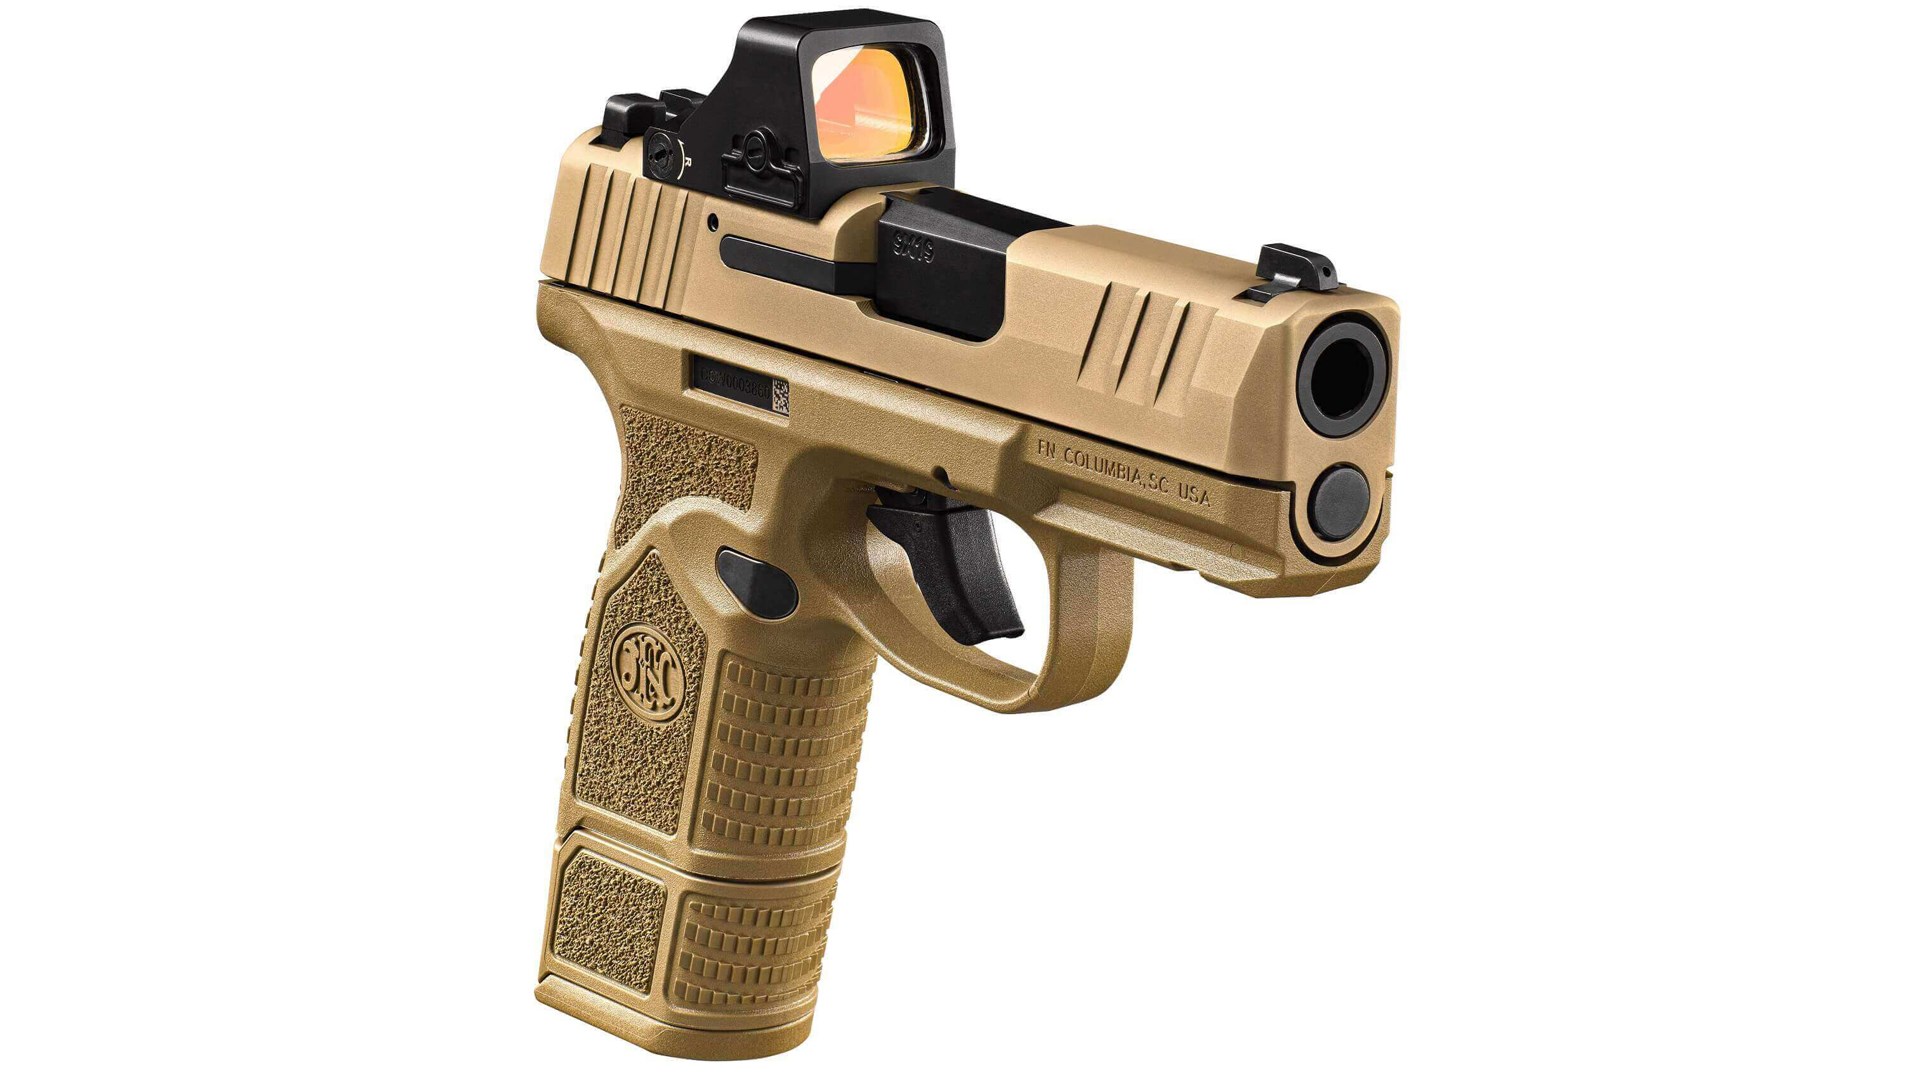 FN America Reflex MRD pistol handgun 9 mm FDE flat dark eartch color brown